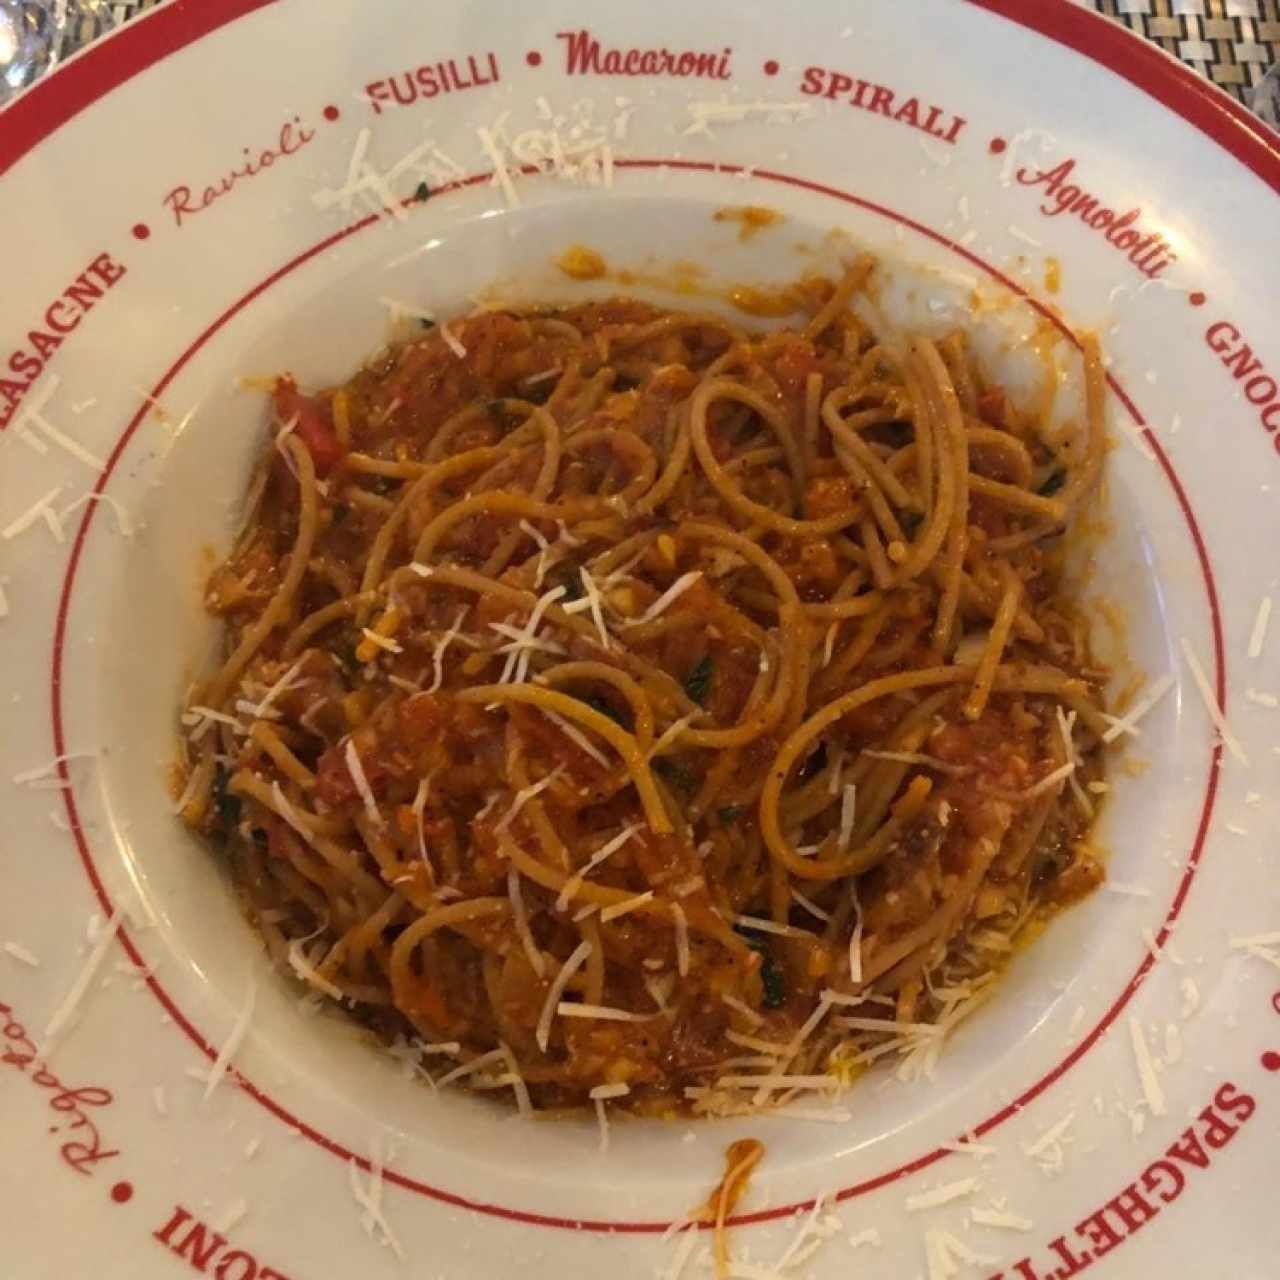 Spaghetti arrabbiata